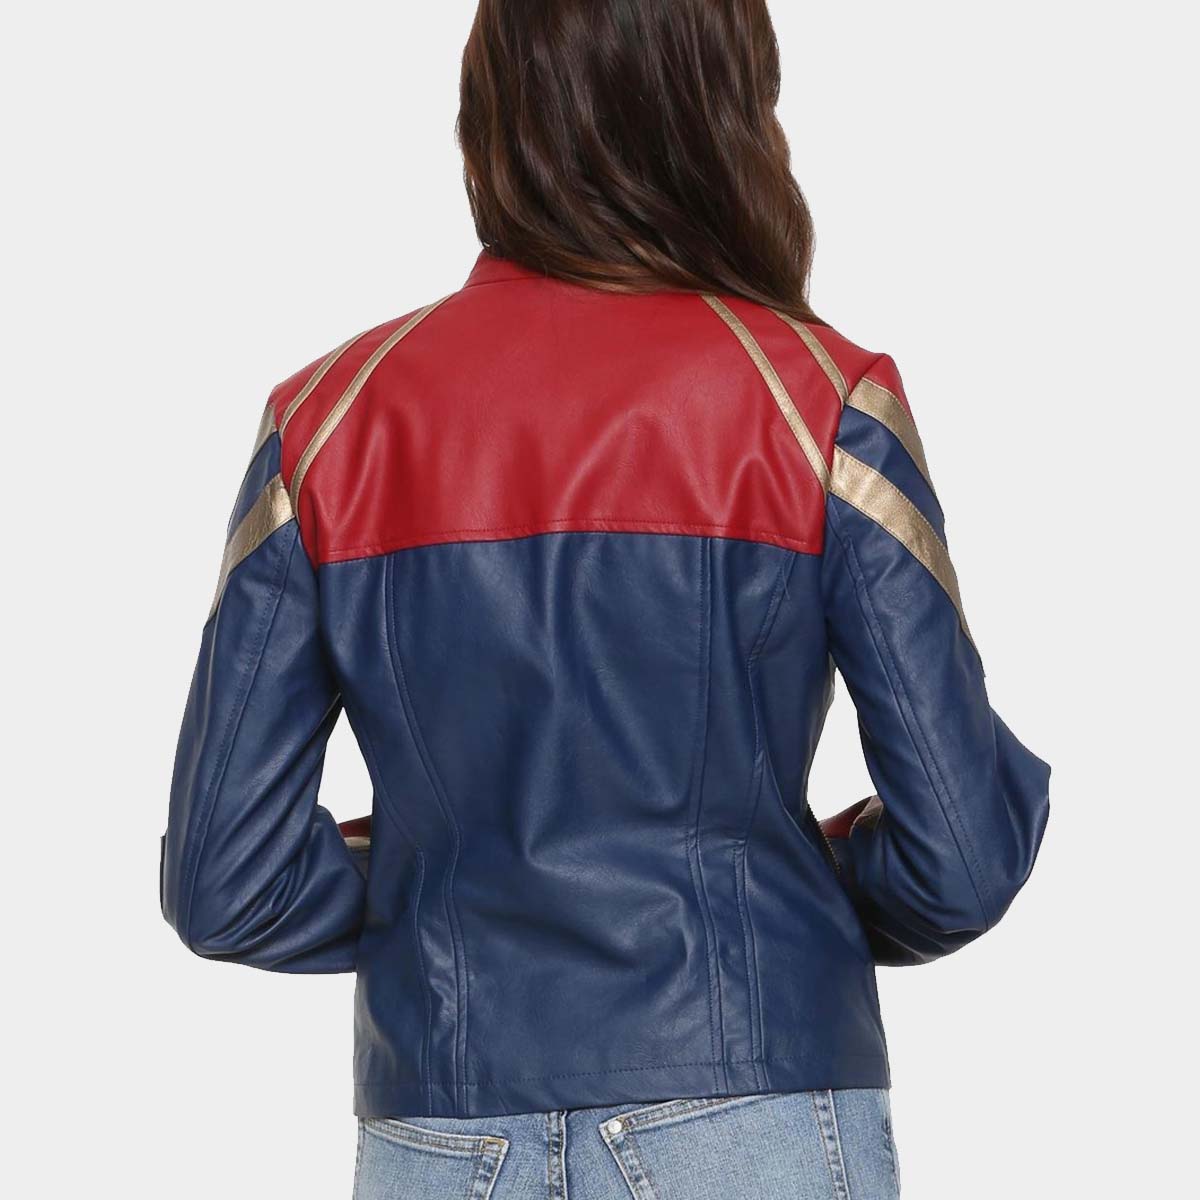 Captain Marvel Star Jacket